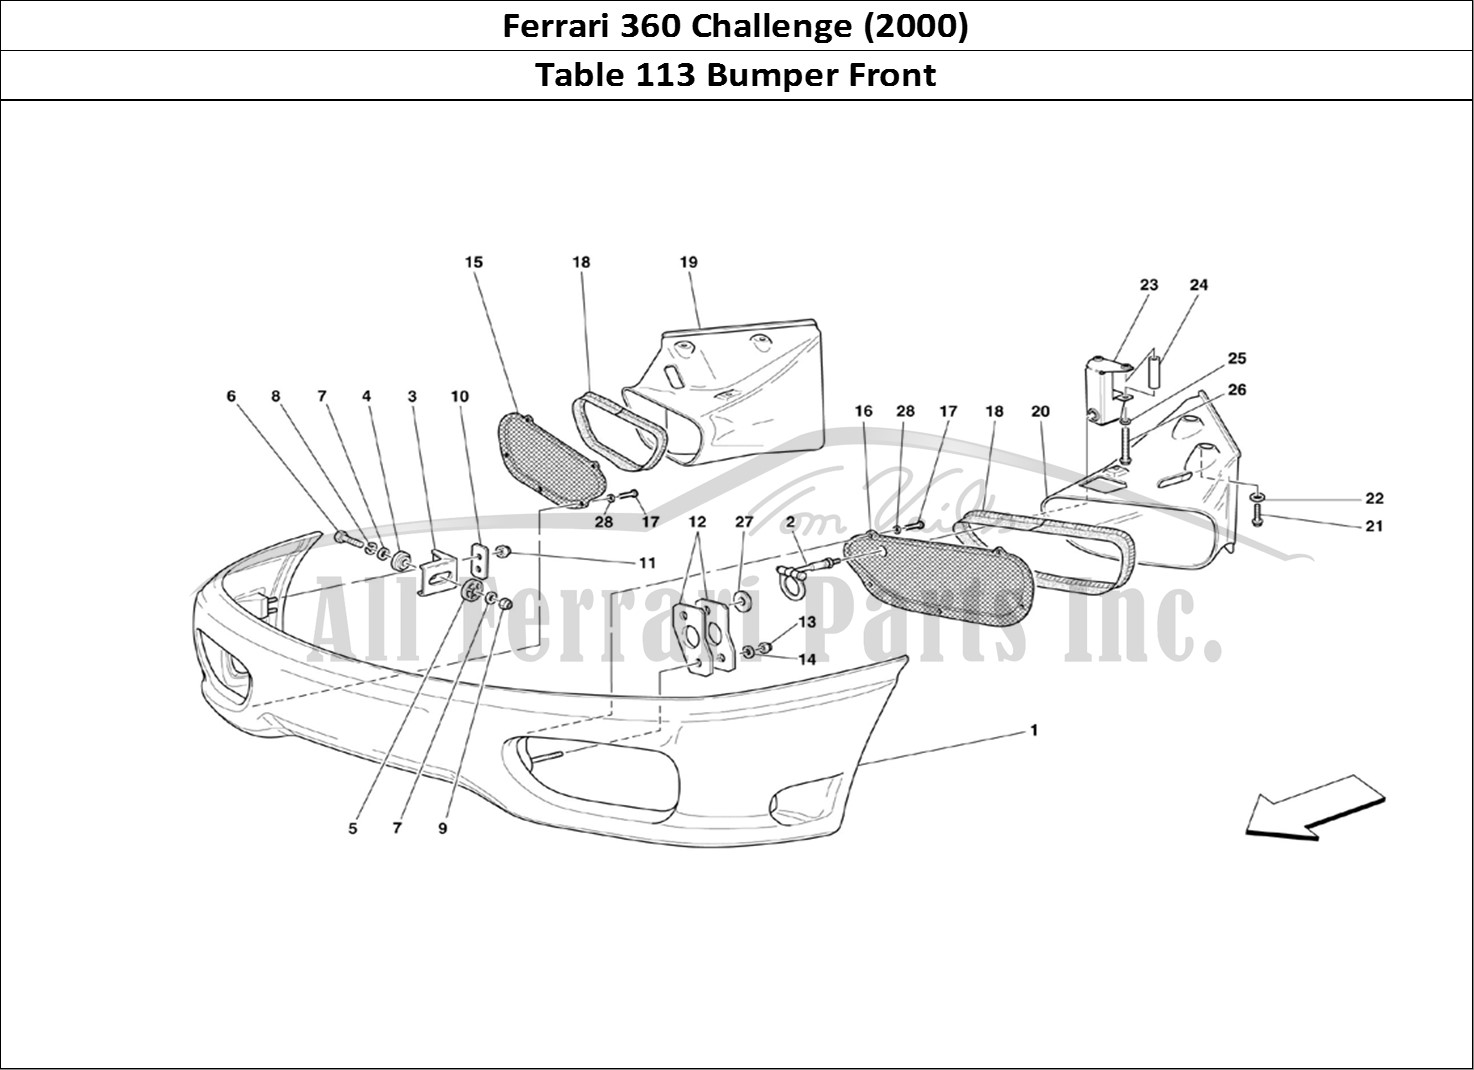 Ferrari Parts Ferrari 360 Challenge (2000) Page 113 Front Bumper